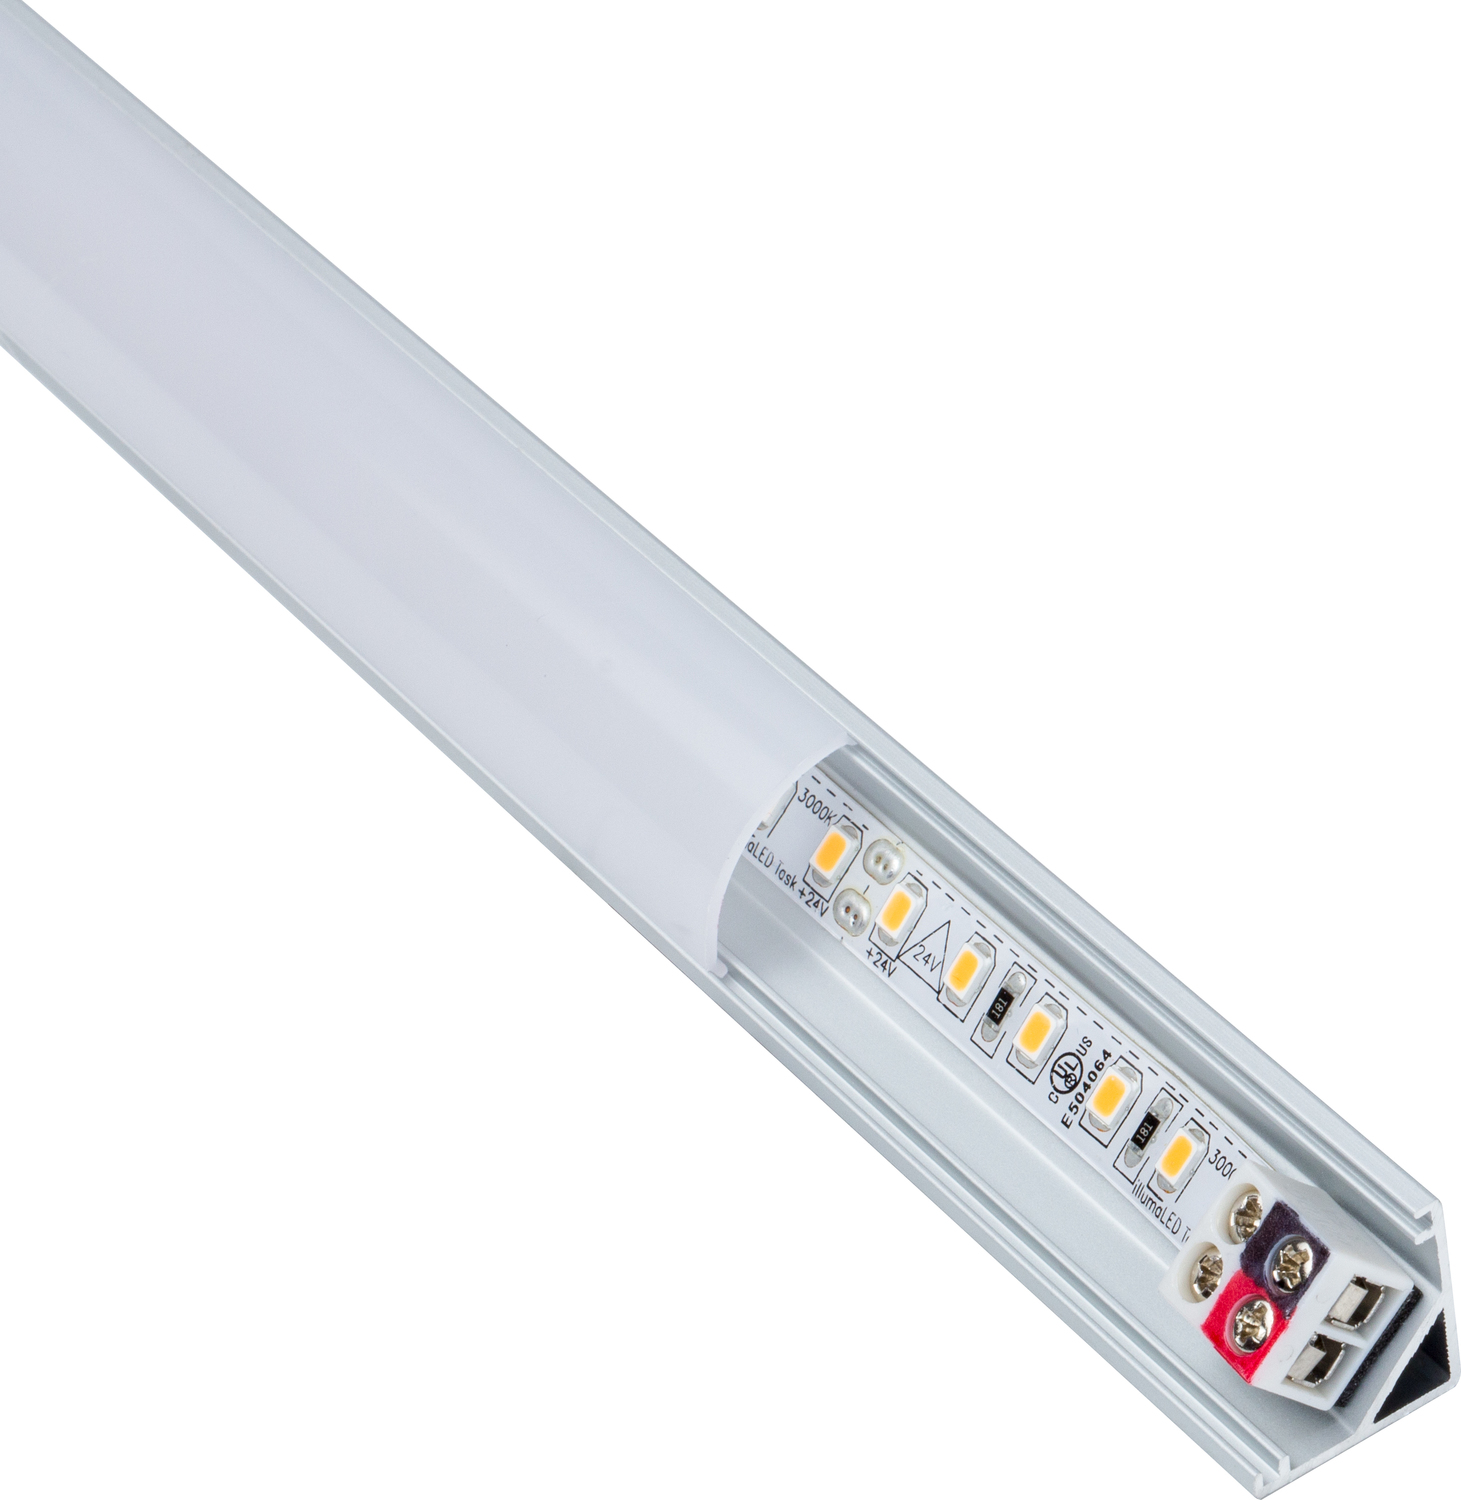 best led strip lights for kitchen cabinets Task Lighting Linear Fixtures;Single-white Lighting Aluminum